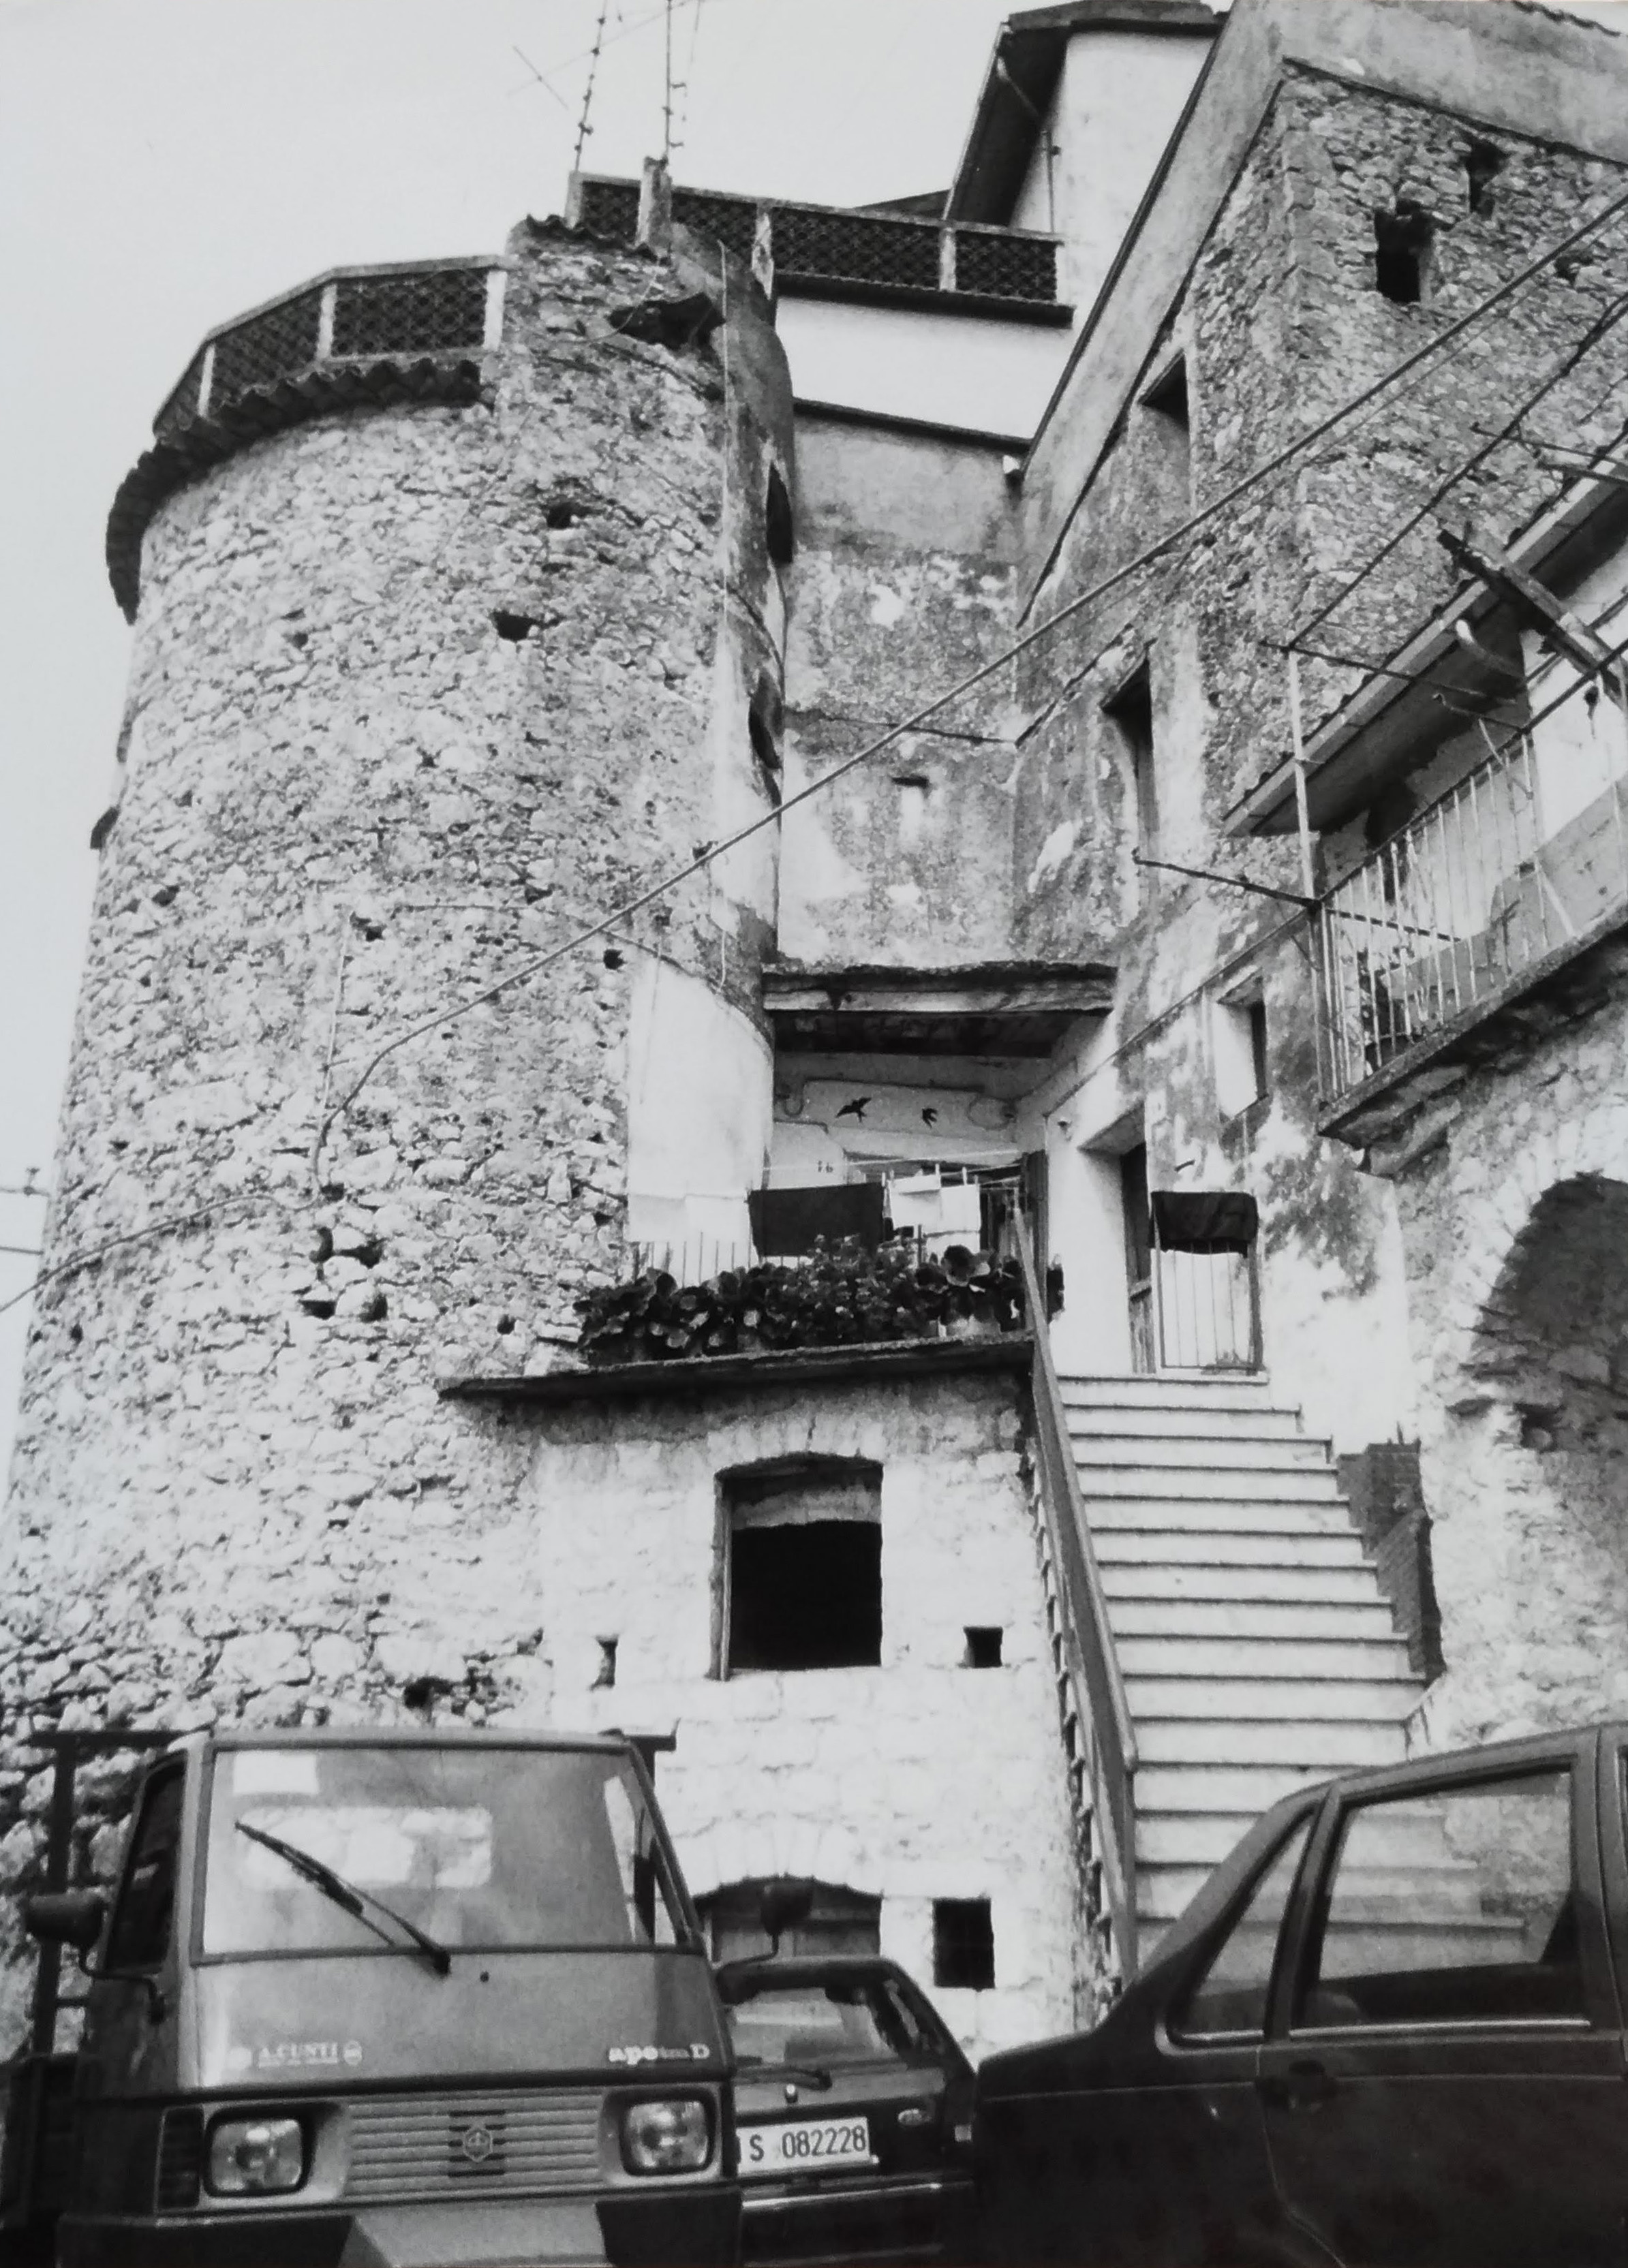 Torre medioevale via Chiesa 14 (torre, difensiva) - Ciorlano (CE) 